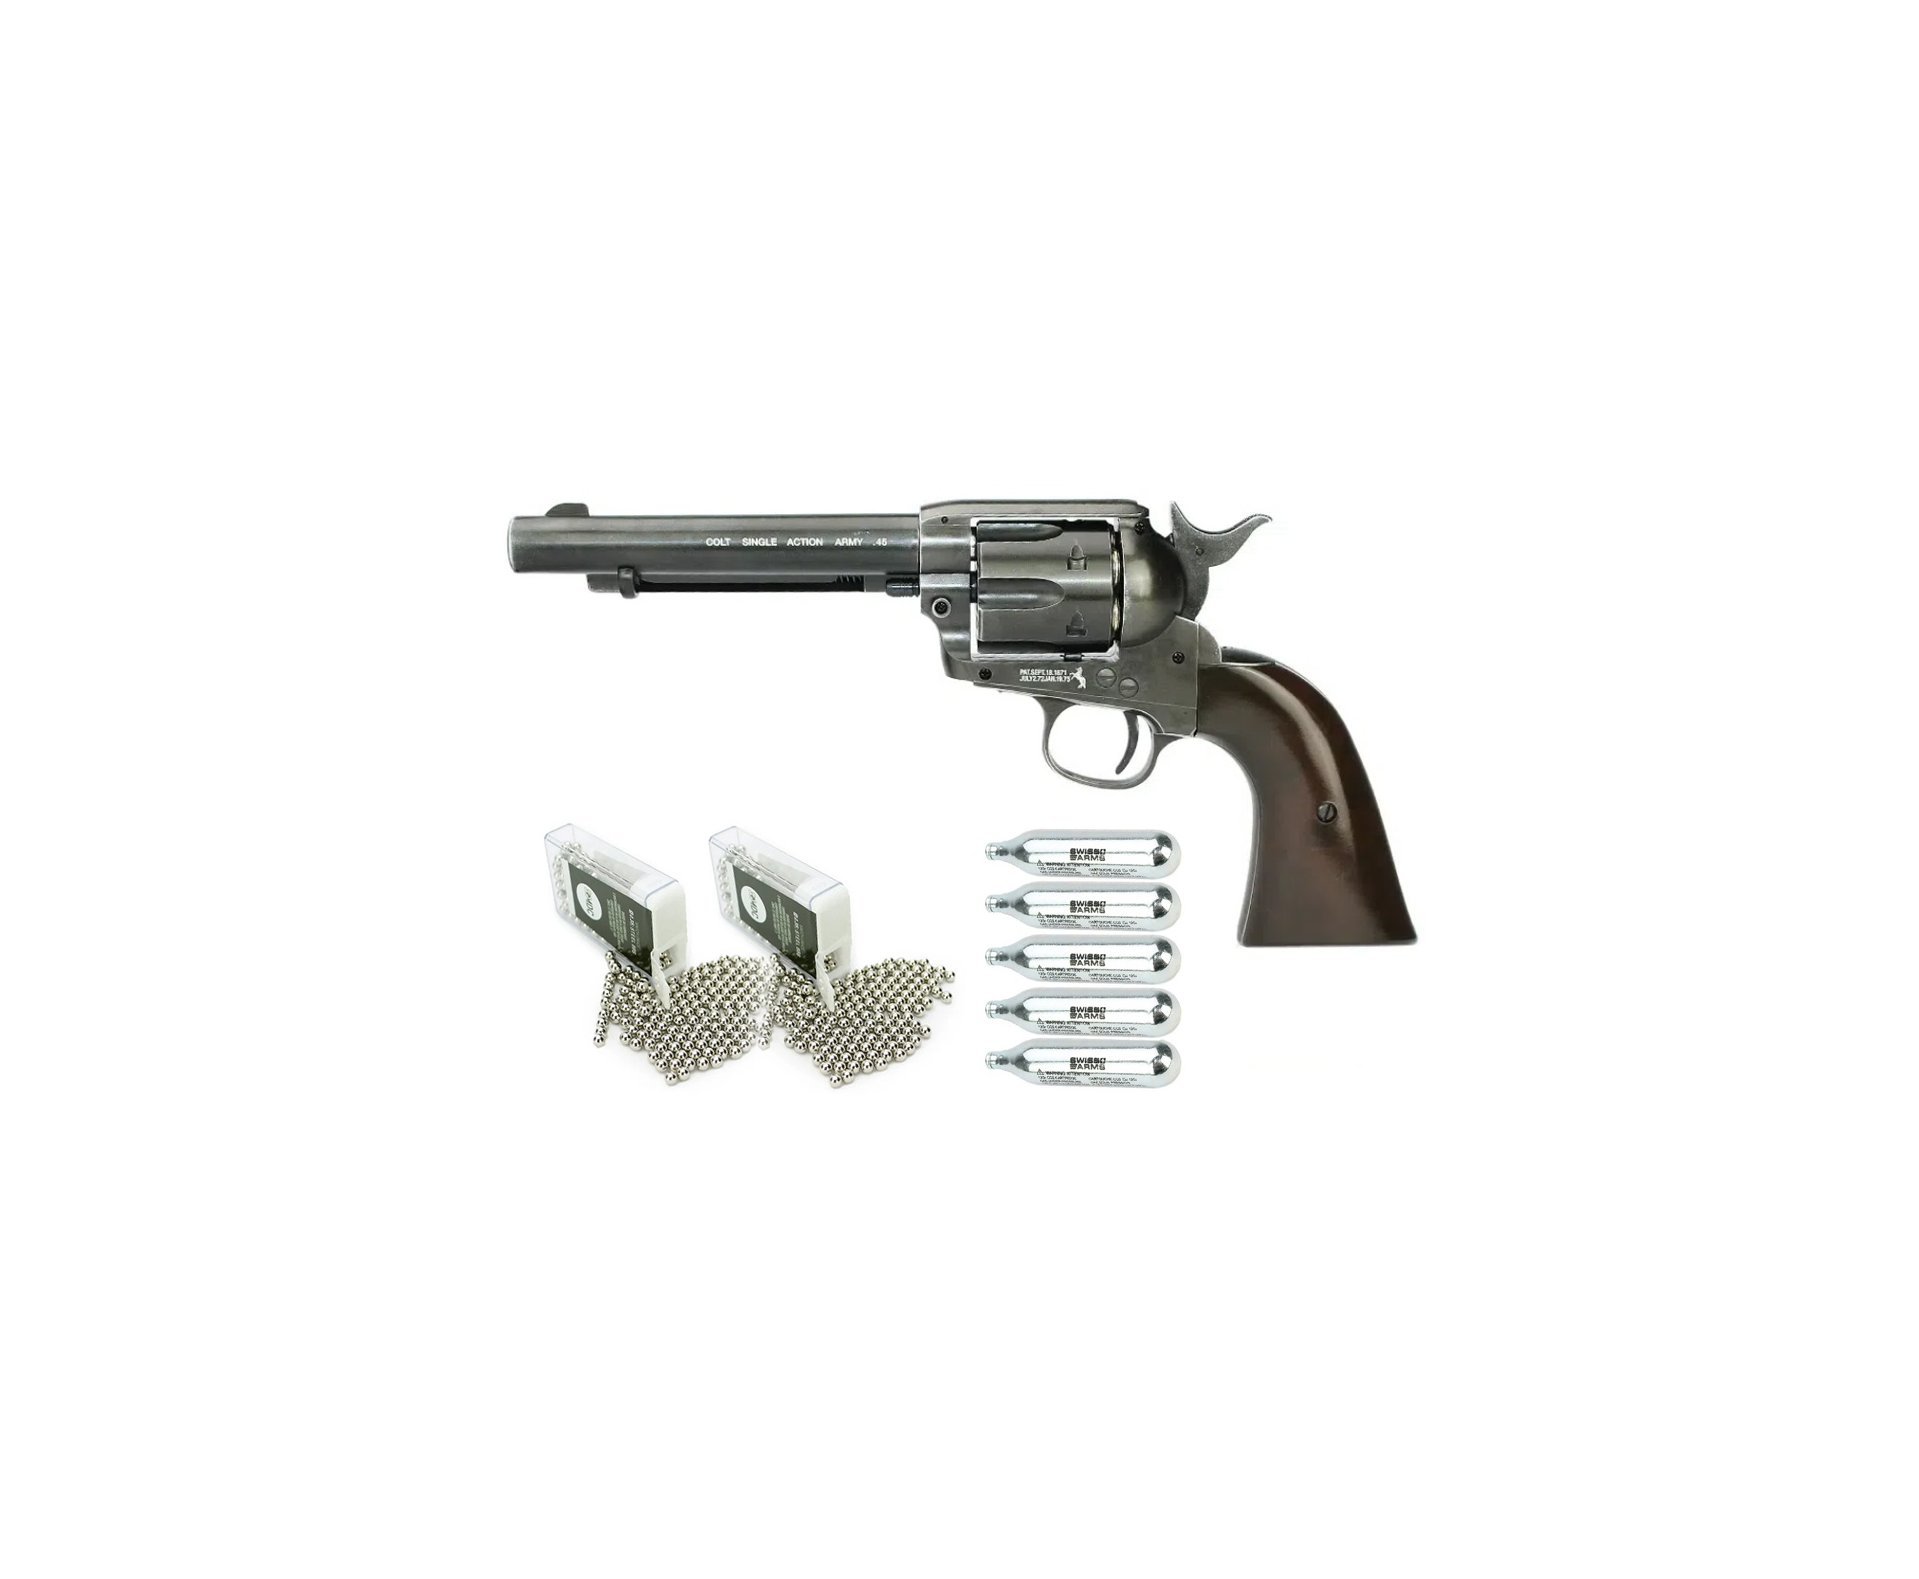 Revólver De Pressão Co2 Colt 45 Saa Faroeste Full Metal Cal 4,5mm + Co2 + Esfera de aço